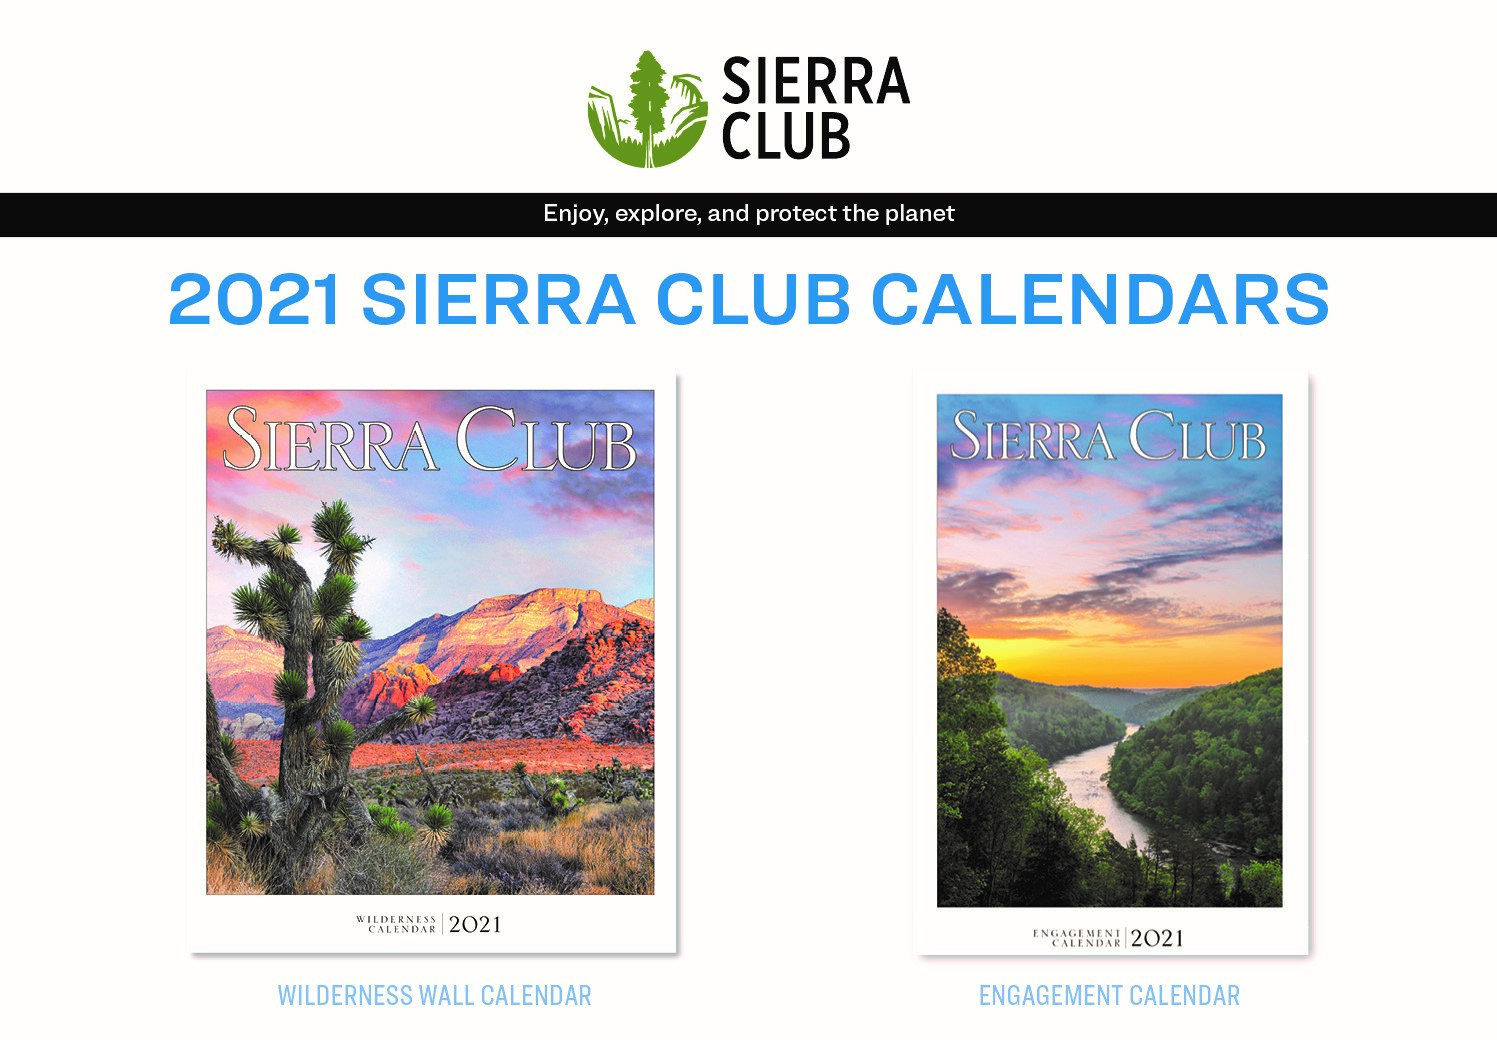 2021 Calendars Available